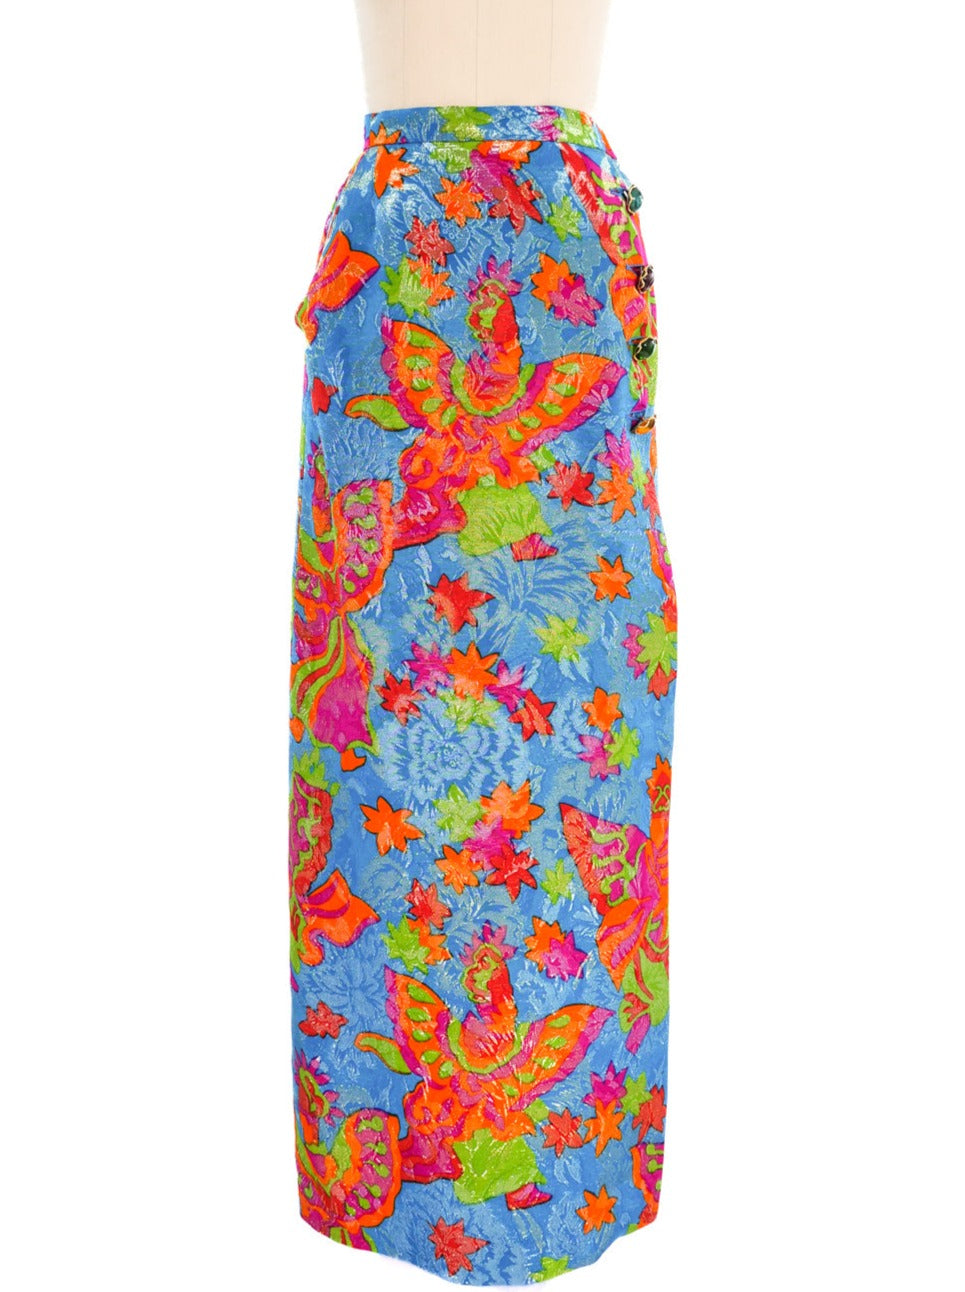 Yves Saint Laurent Floral Printed Metallic Skirt